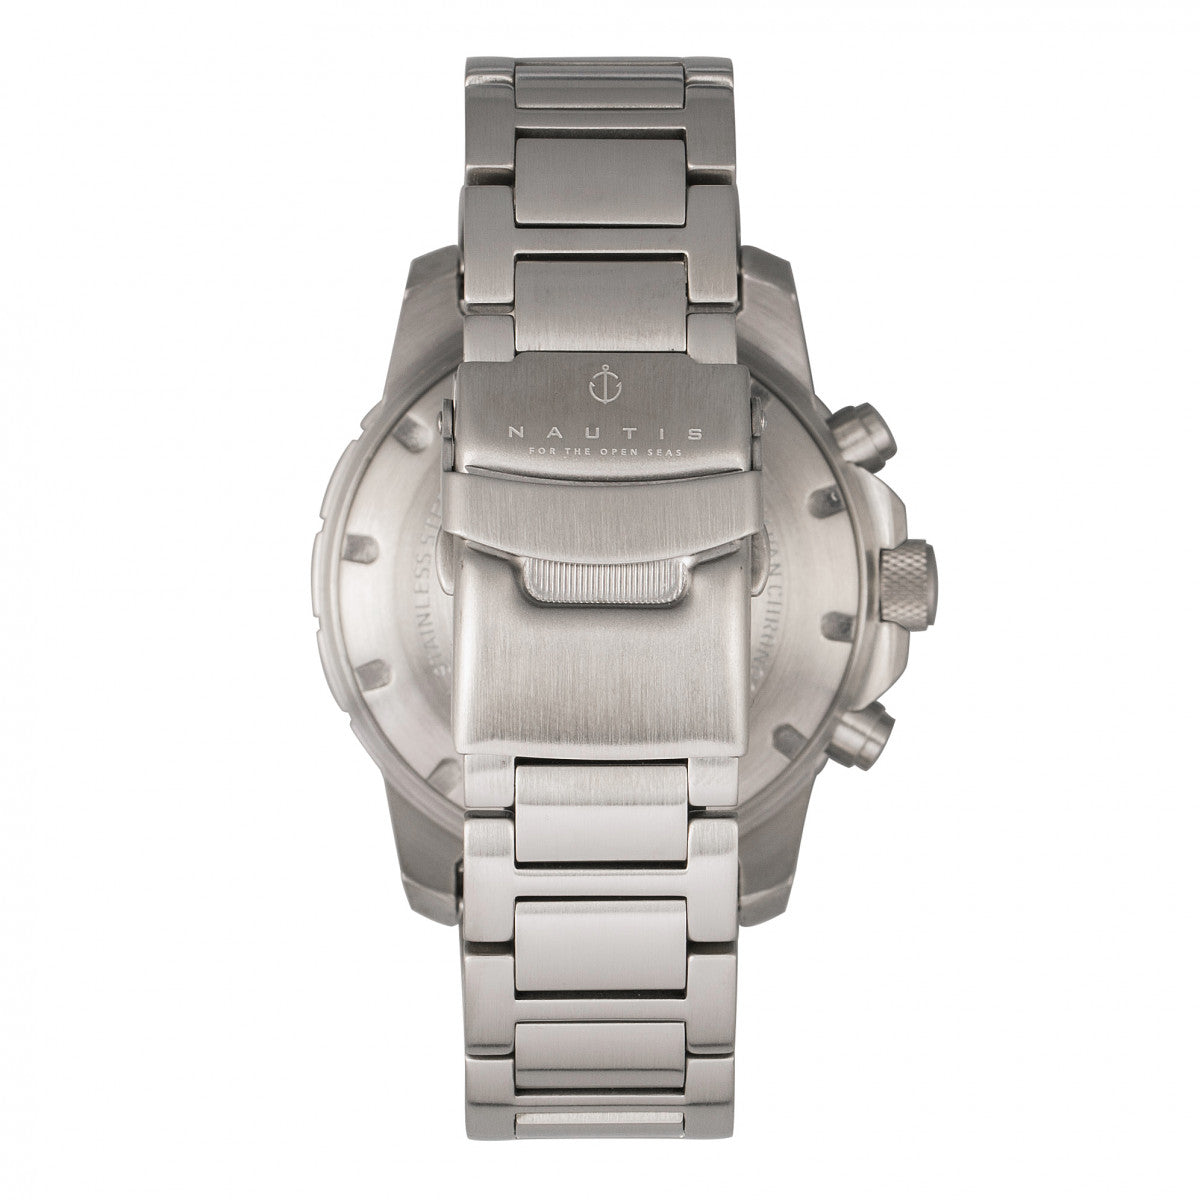 Nautis Dive Chrono 500 Chronograph Bracelet Watch - Green - 17065-I